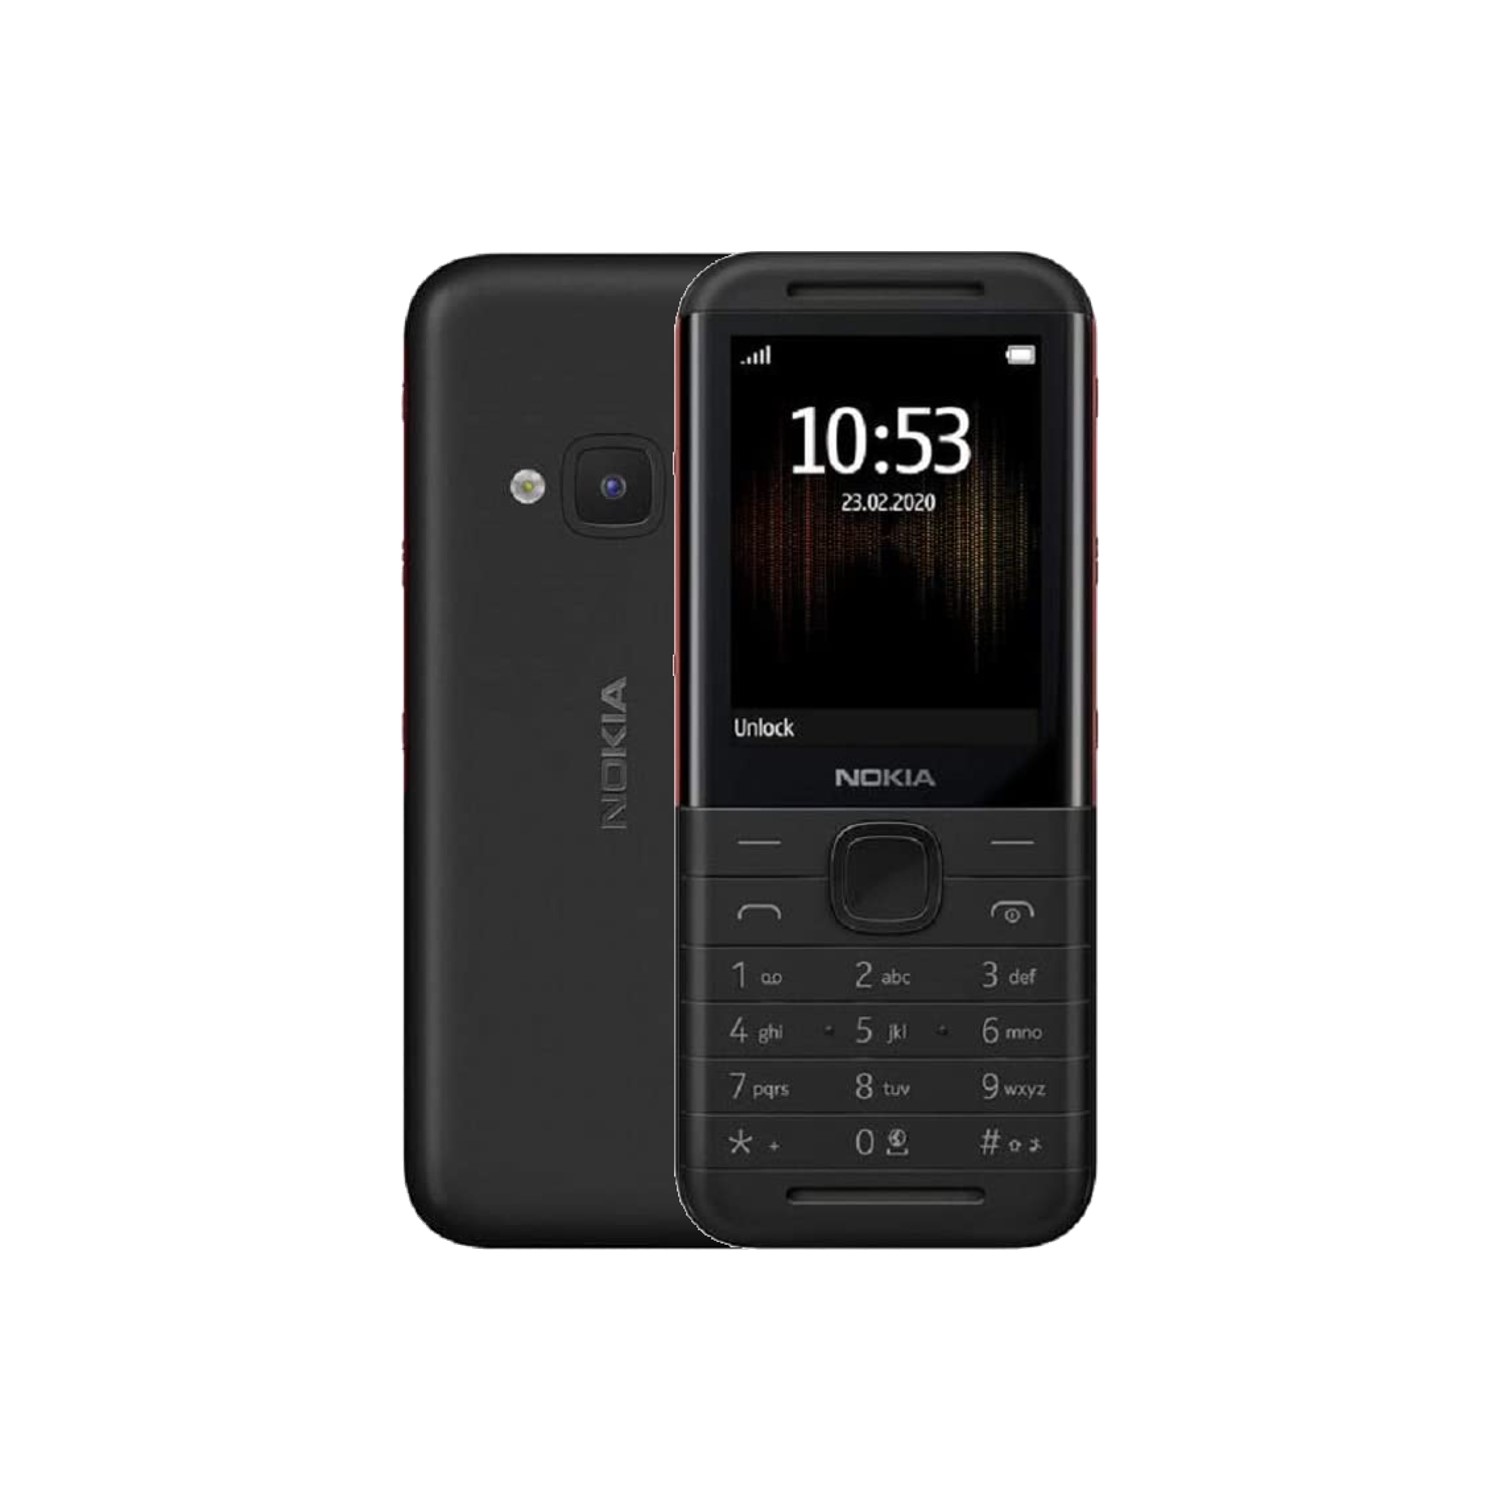 Nokia 5310 2020 Black 2.4 2G Dual SIM Unlocked & SIM Free